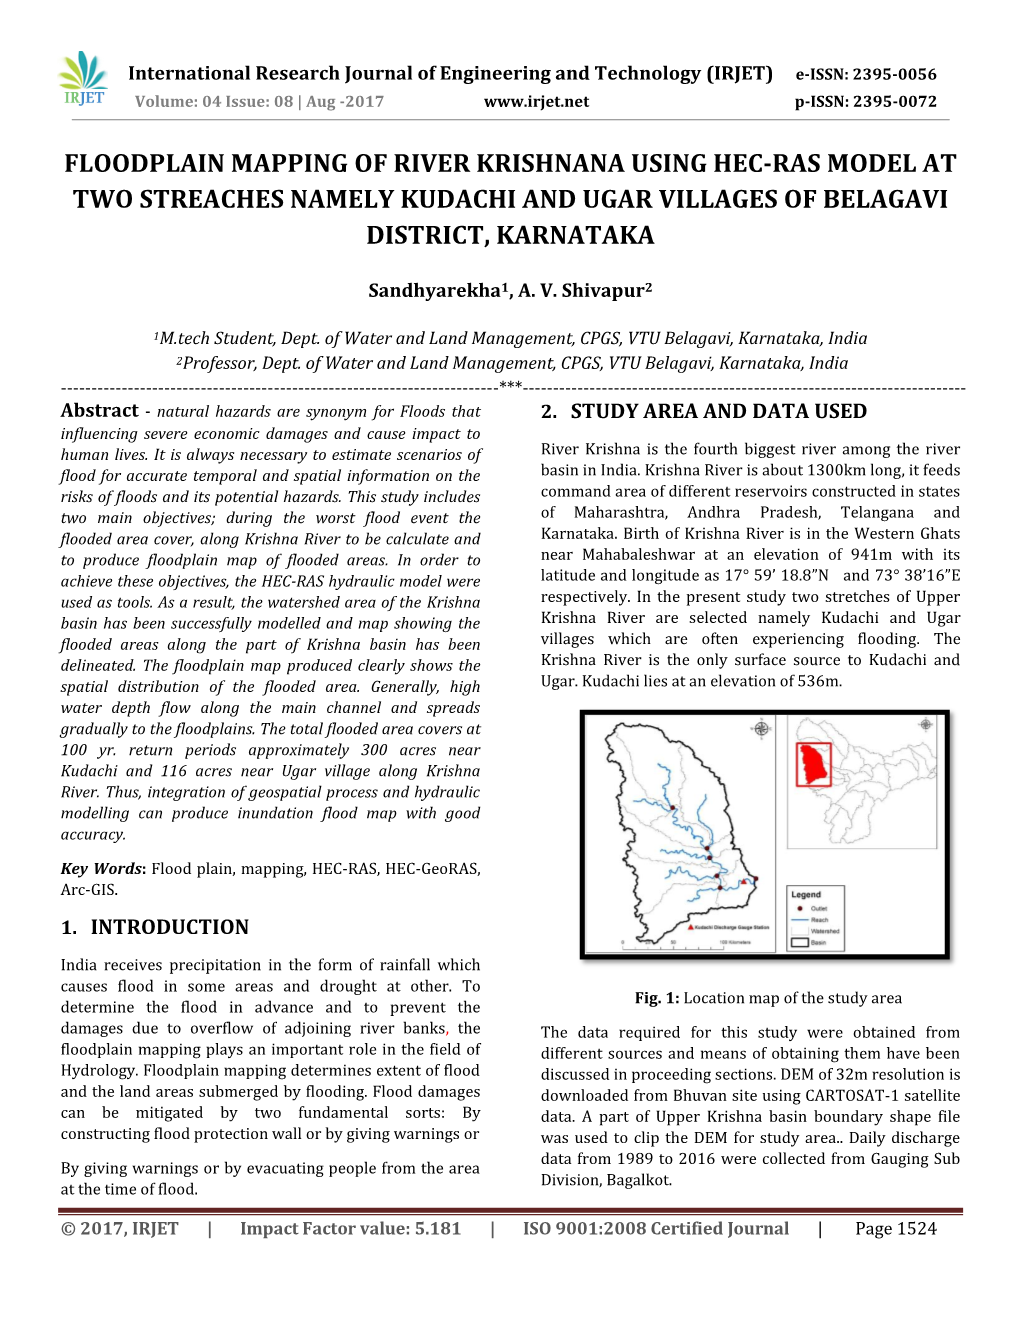 Floodplain Mapping of River Krishnana Using Hec-Ras Model at Two Streaches Namely Kudachi and Ugar Villages of Belagavi District, Karnataka